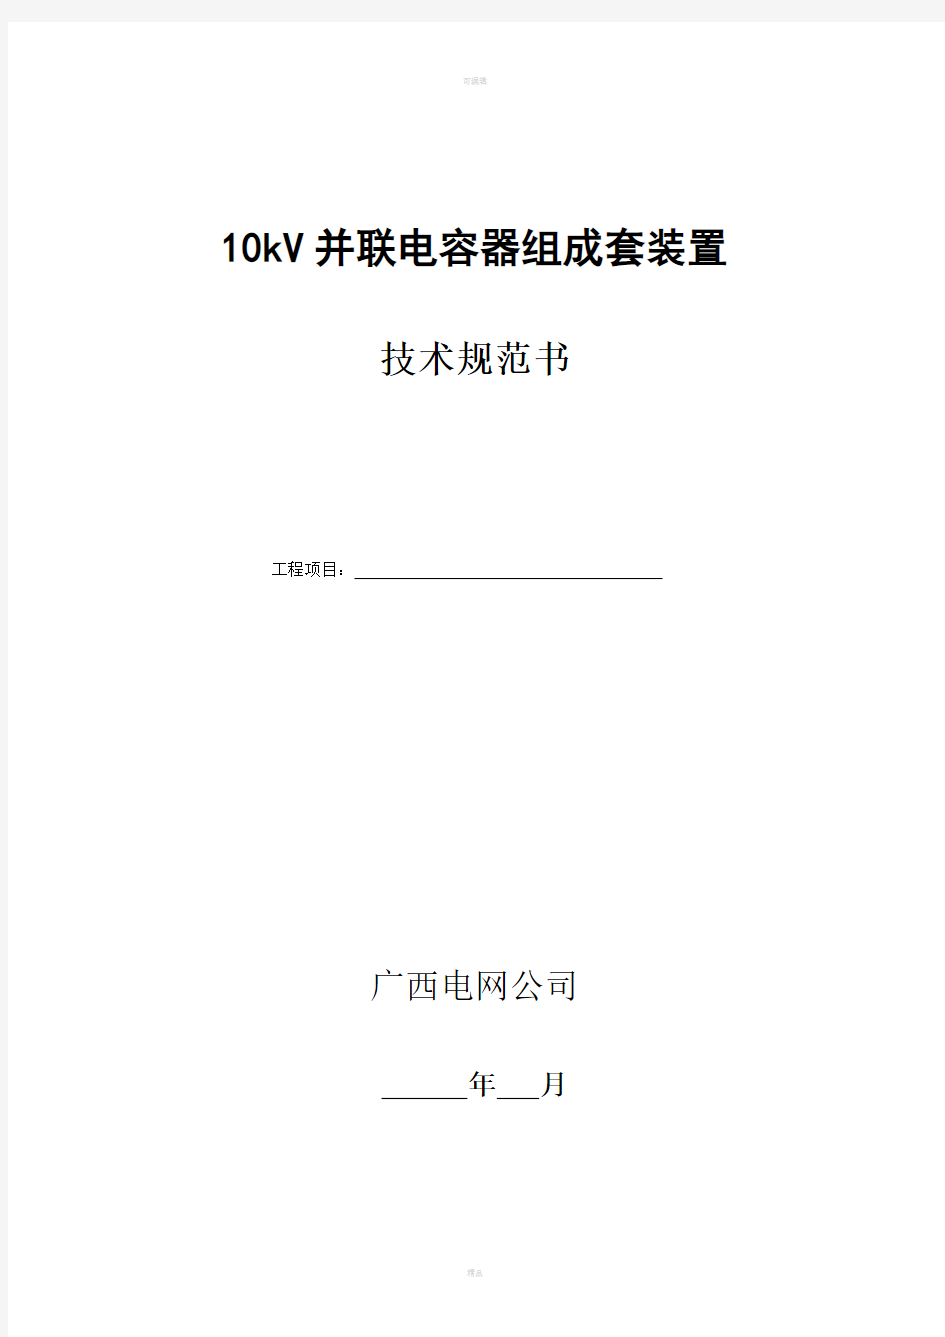 10kV并联电容器组技术规范书